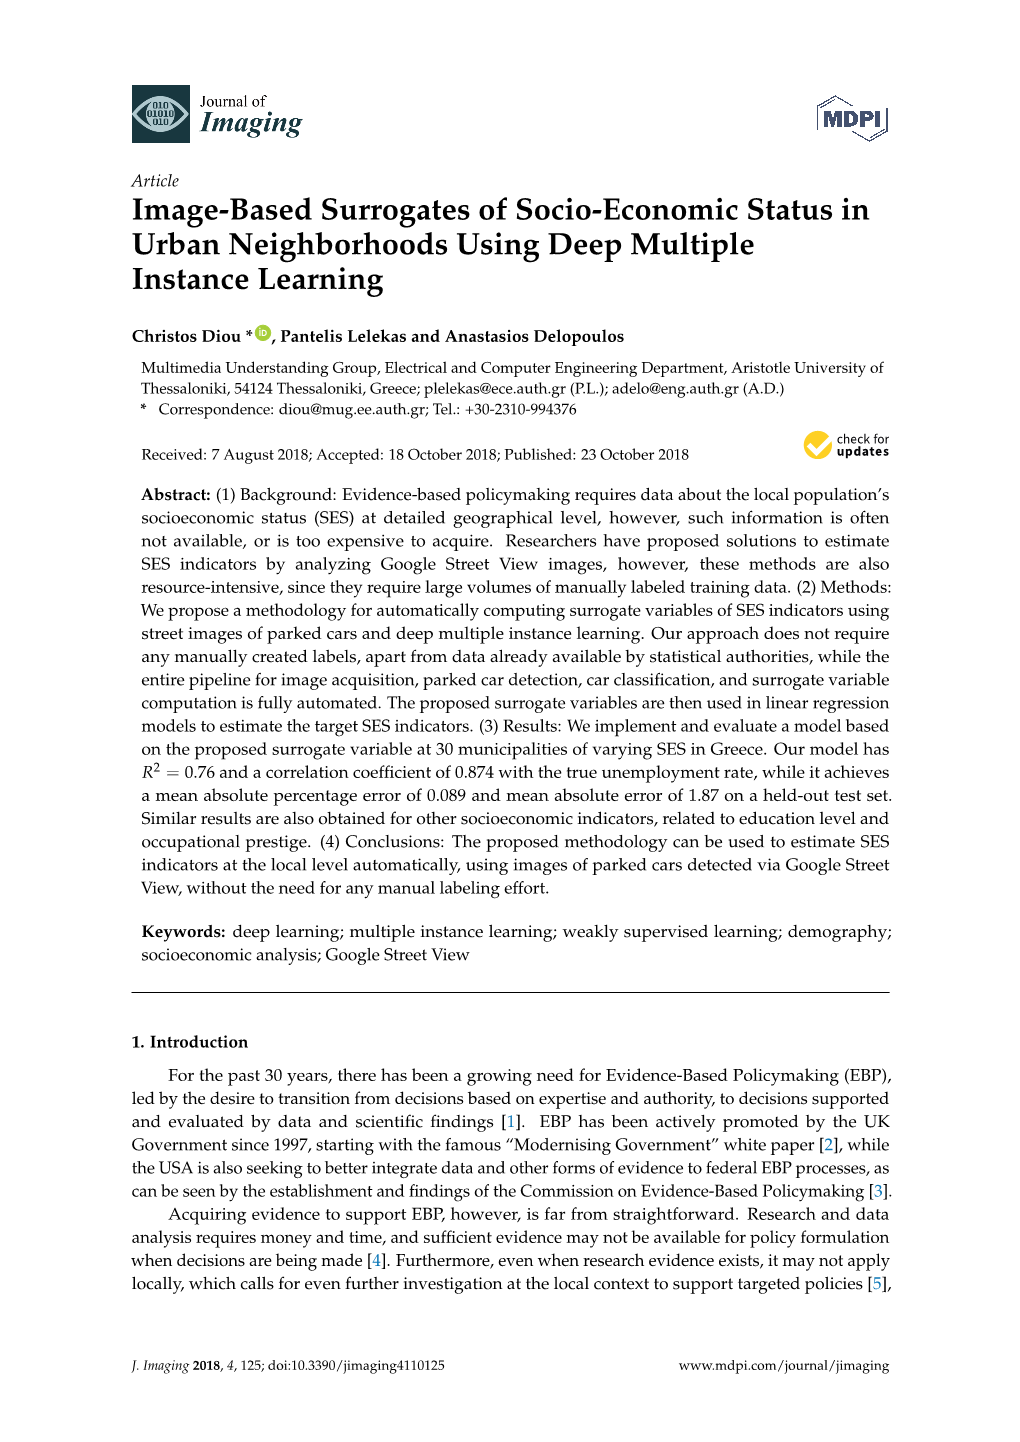 Image-Based Surrogates of Socio-Economic Status in Urban Neighborhoods Using Deep Multiple Instance Learning